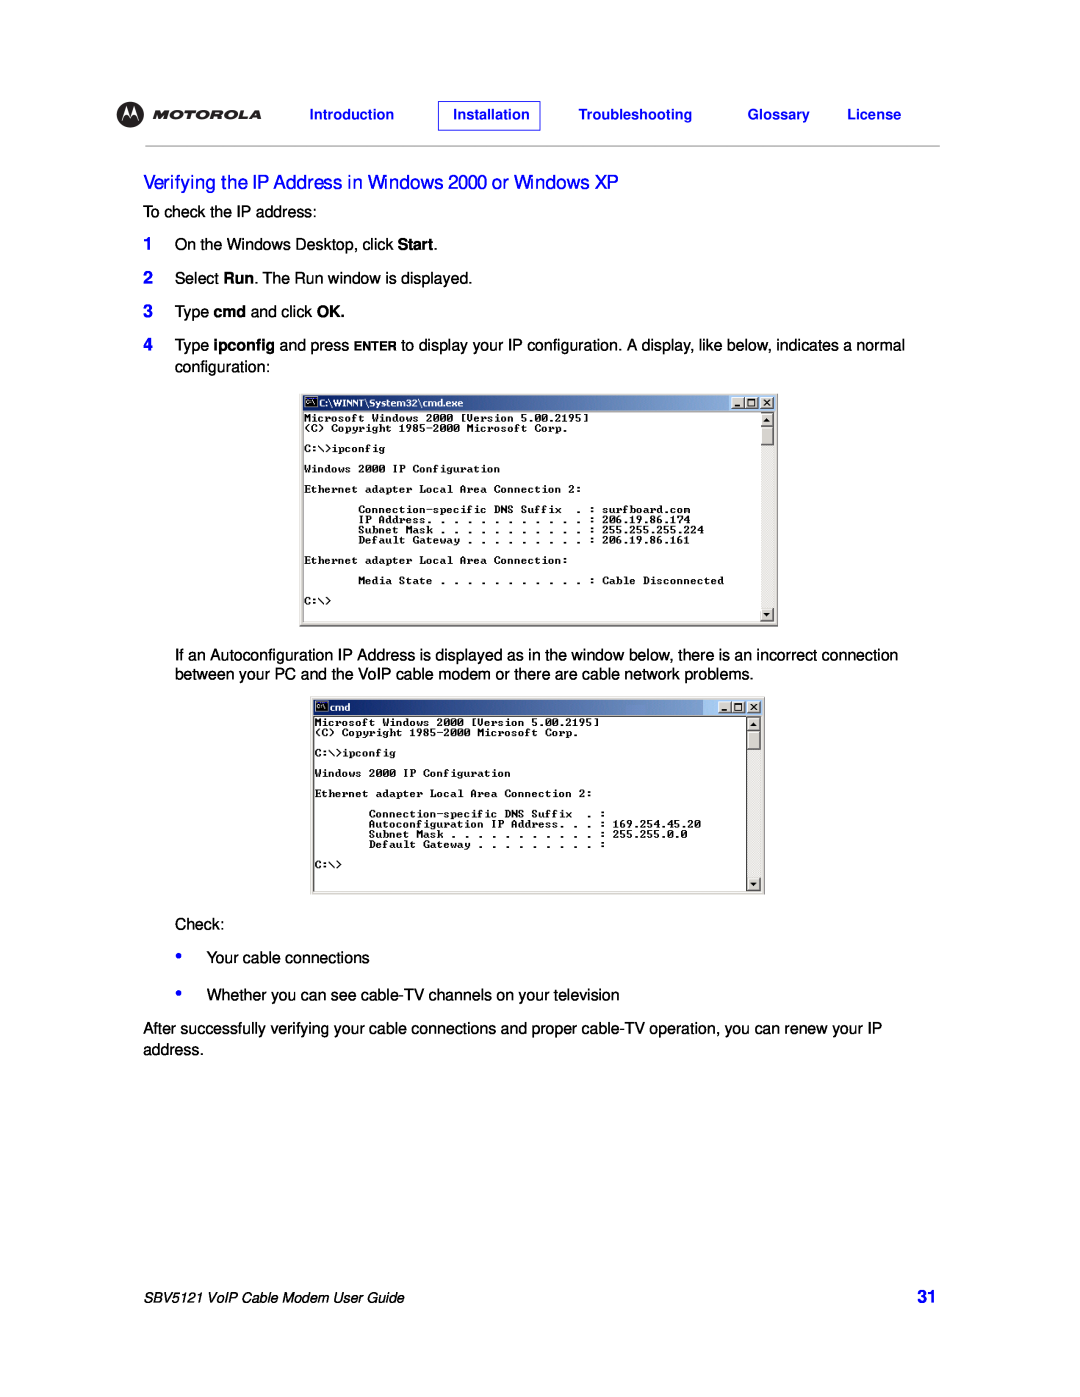 Nikon SBV5121 manual Verifying the IP Address in Windows 2000 or Windows XP 